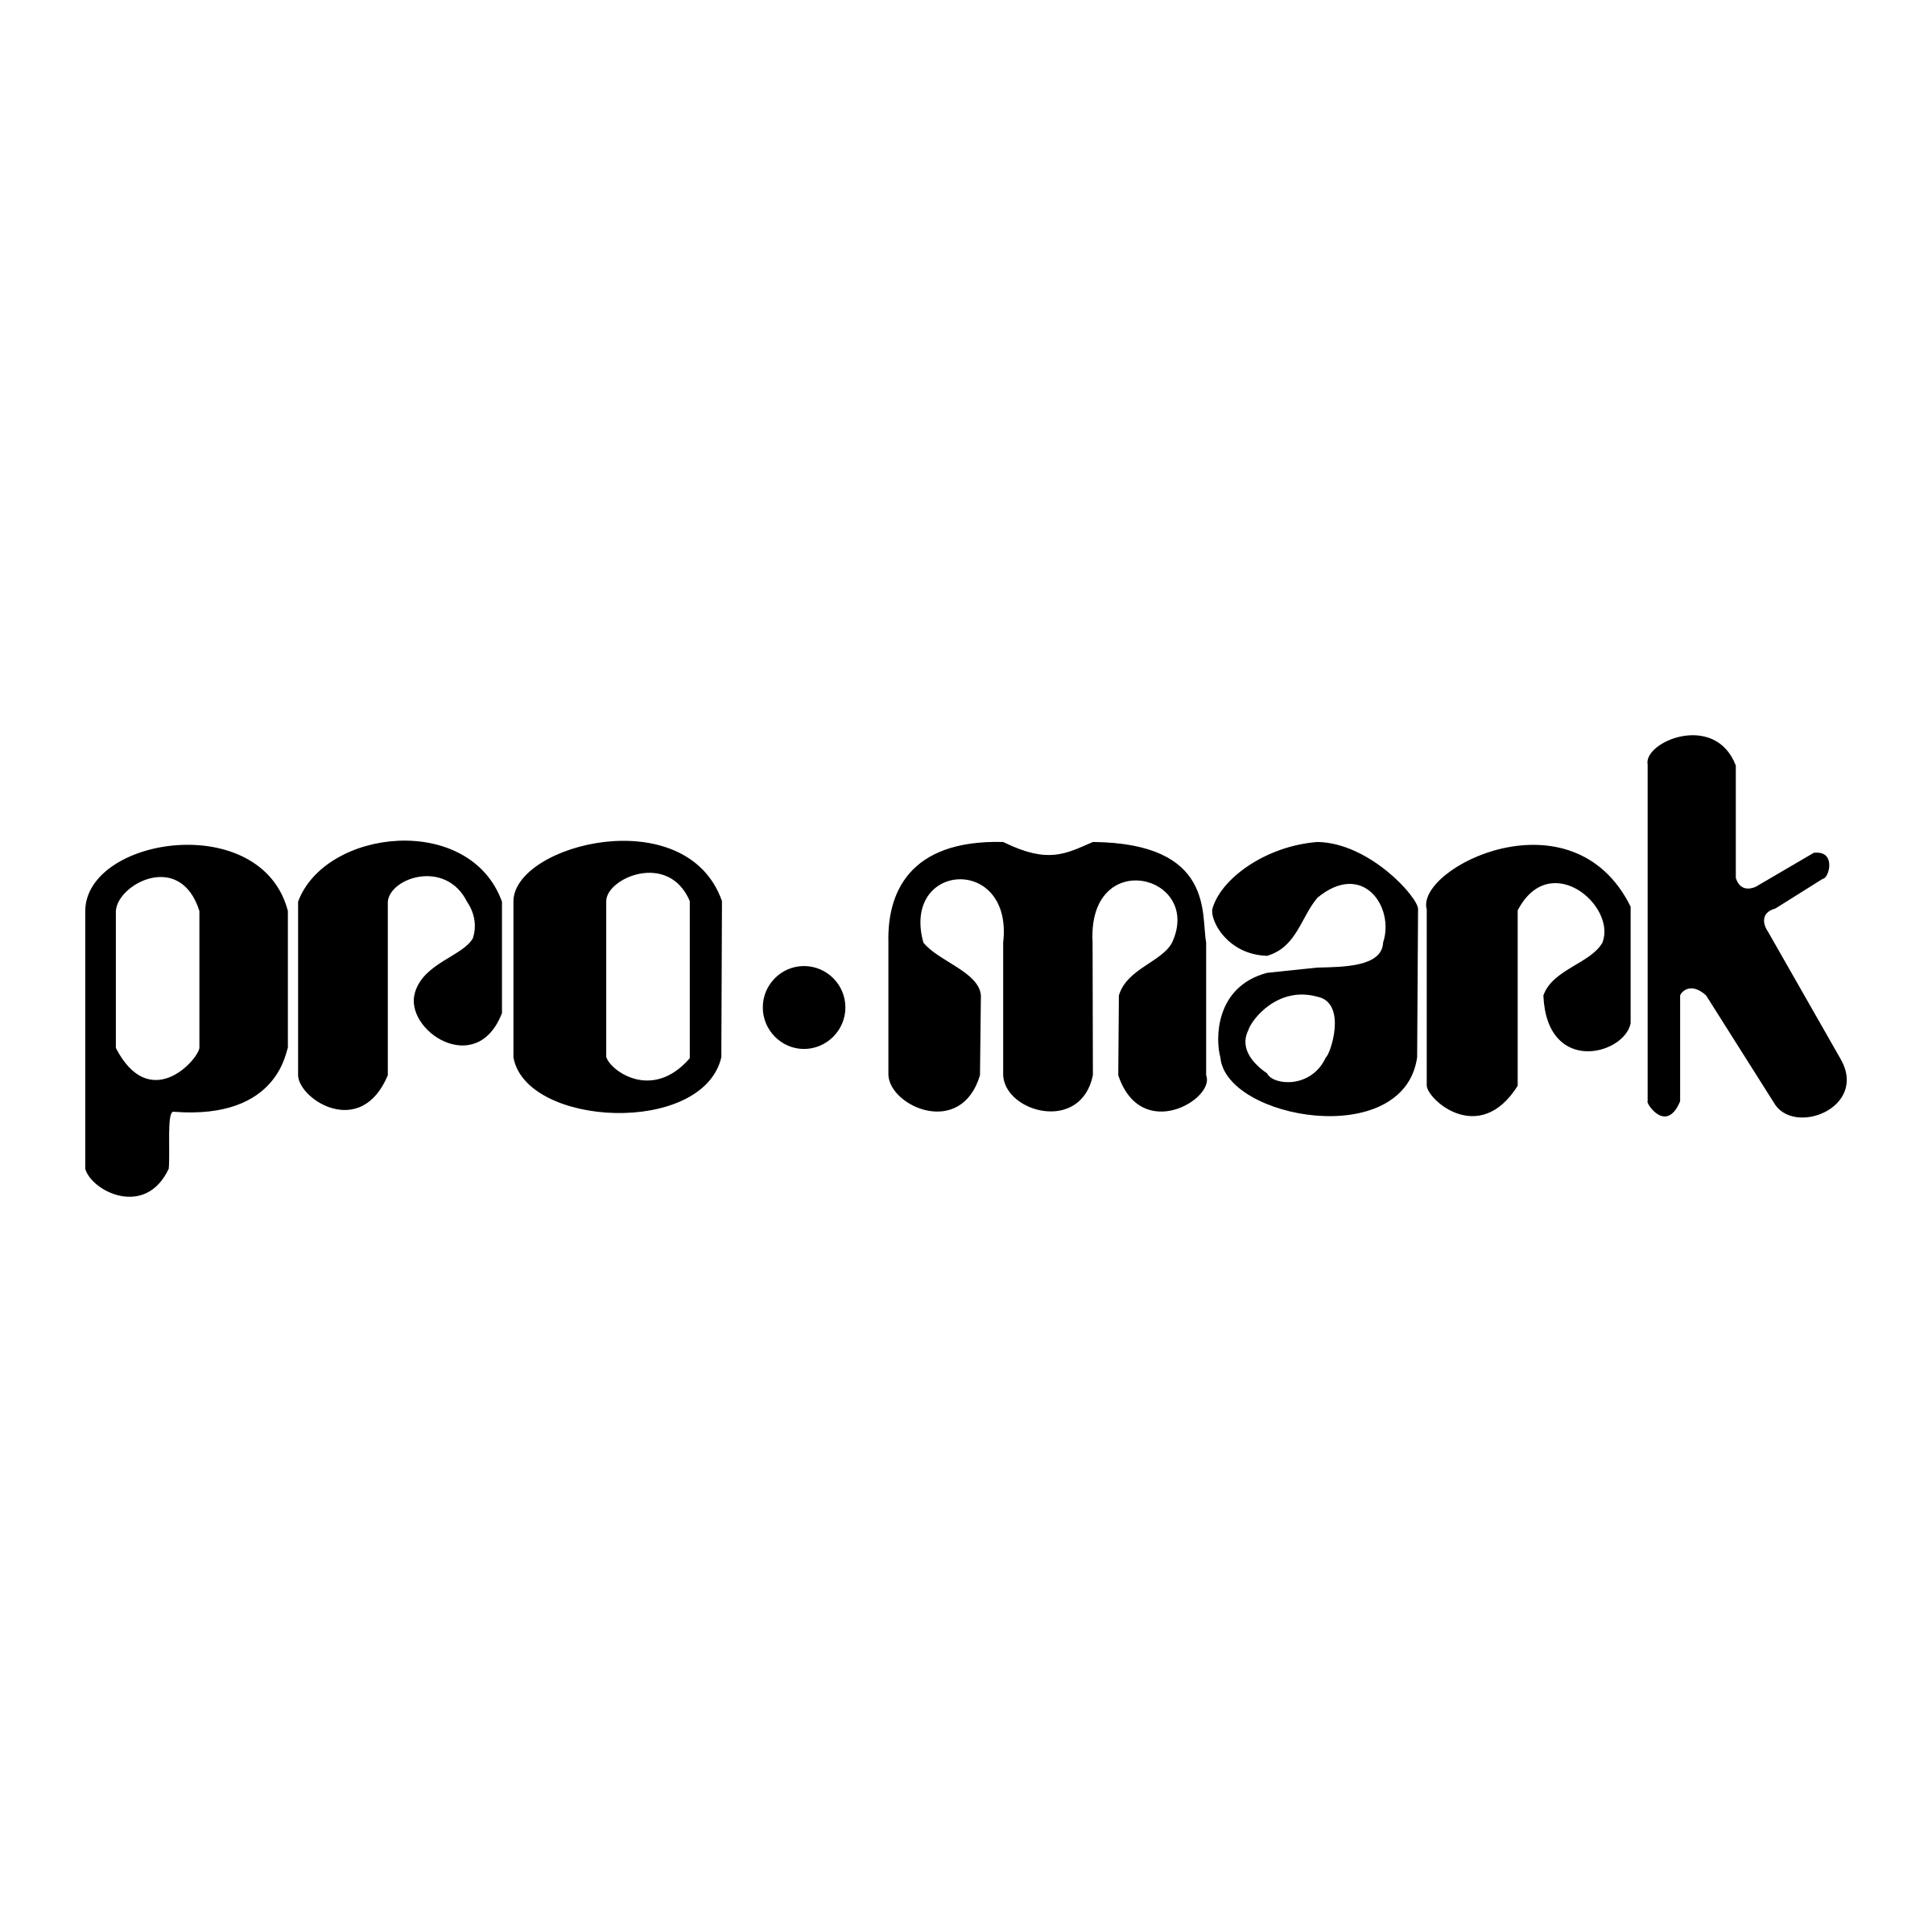 ProMark Logo - Pro Mark Logo PNG Transparent & SVG Vector - Freebie Supply